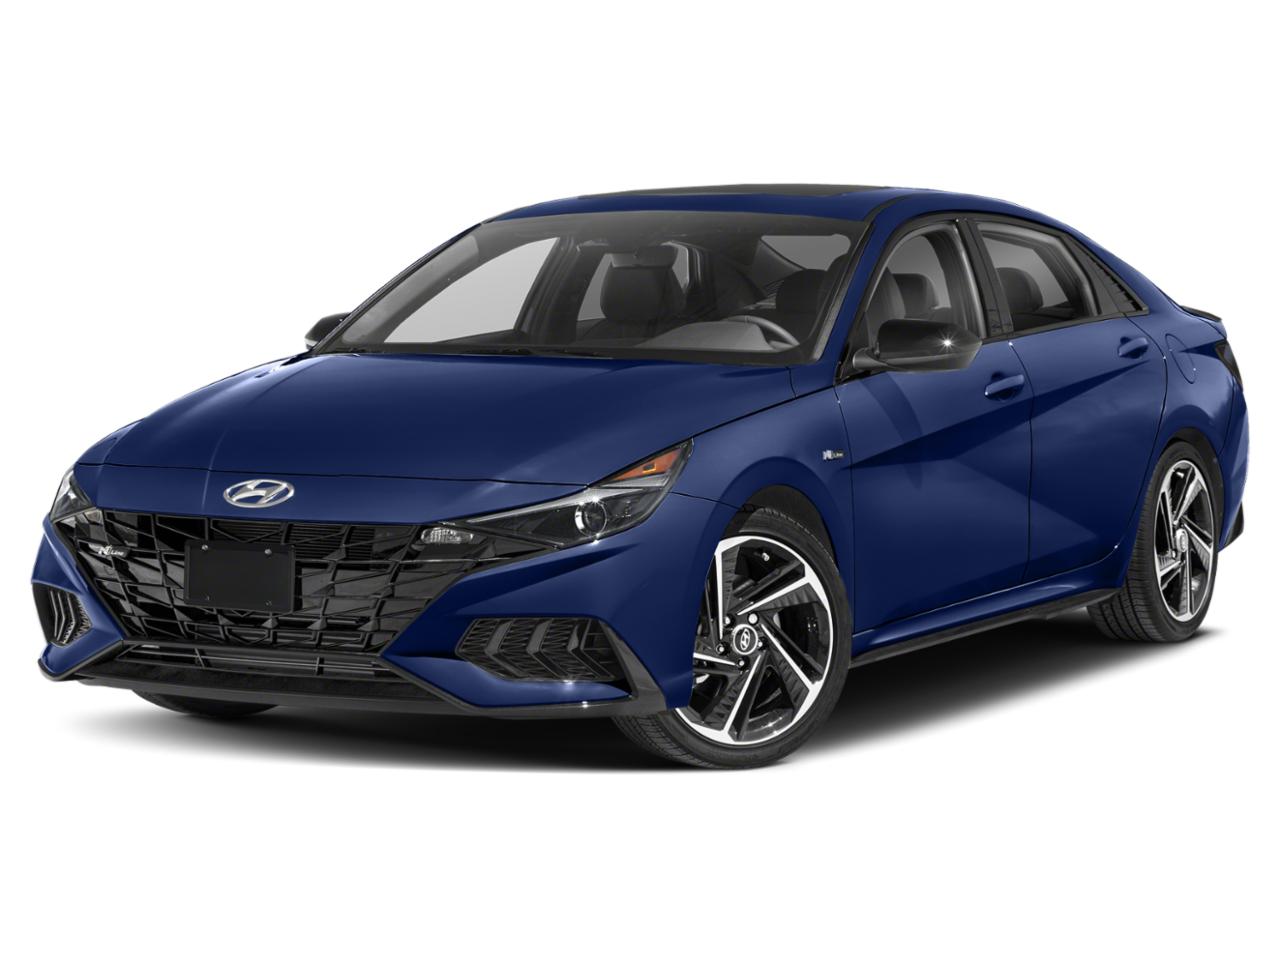 New 2022 Hyundai Elantra in Philadelphia - Comfortable Compact Car